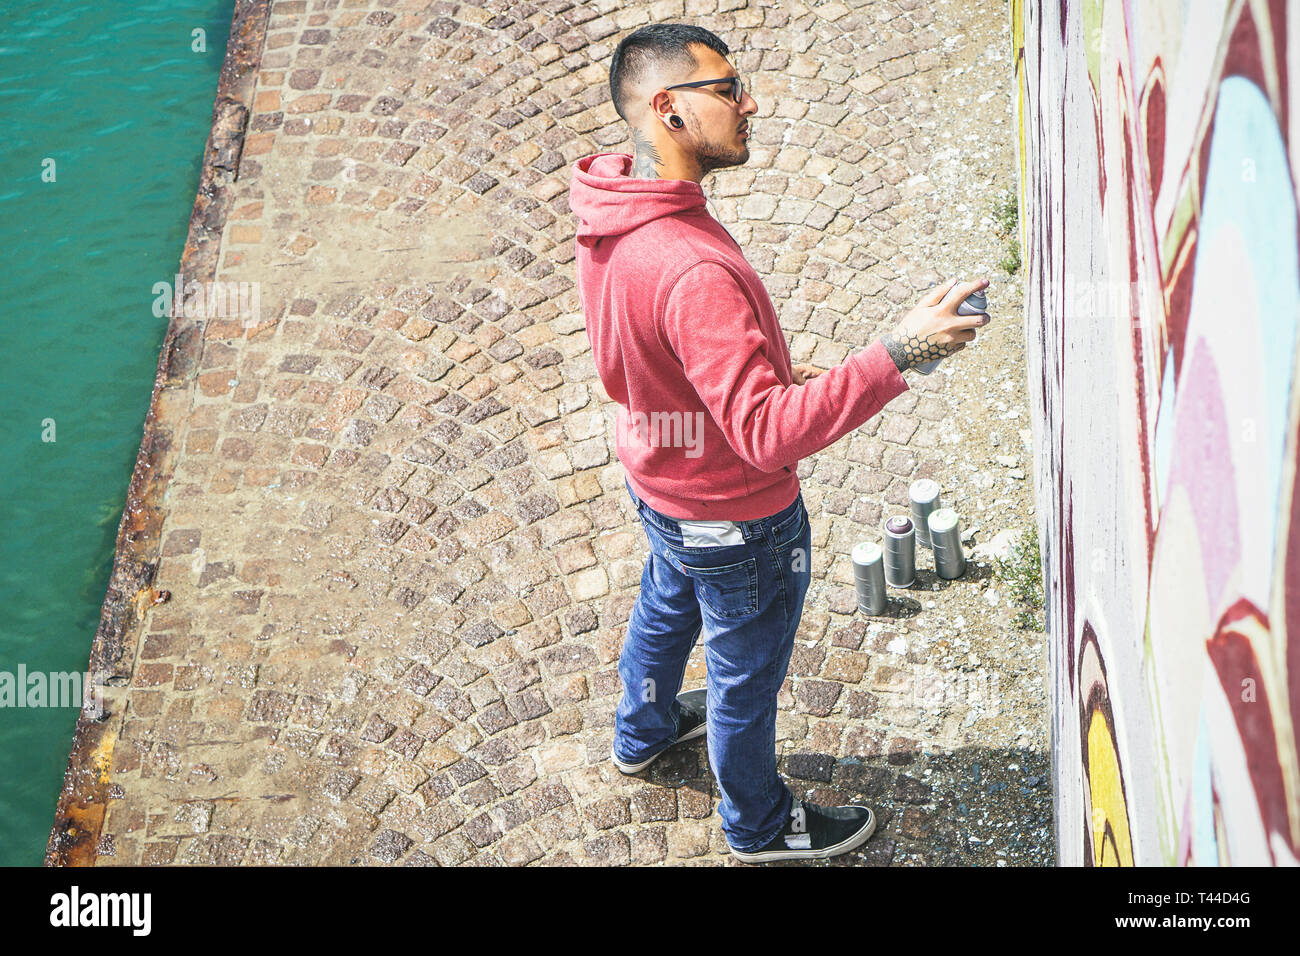 Street Graffiti Künstler Malen mit einem Color Spray kann ein Graffiti Wandbild an der Wand - Urban, Lifestyle, Street Art Konzept Stockfoto